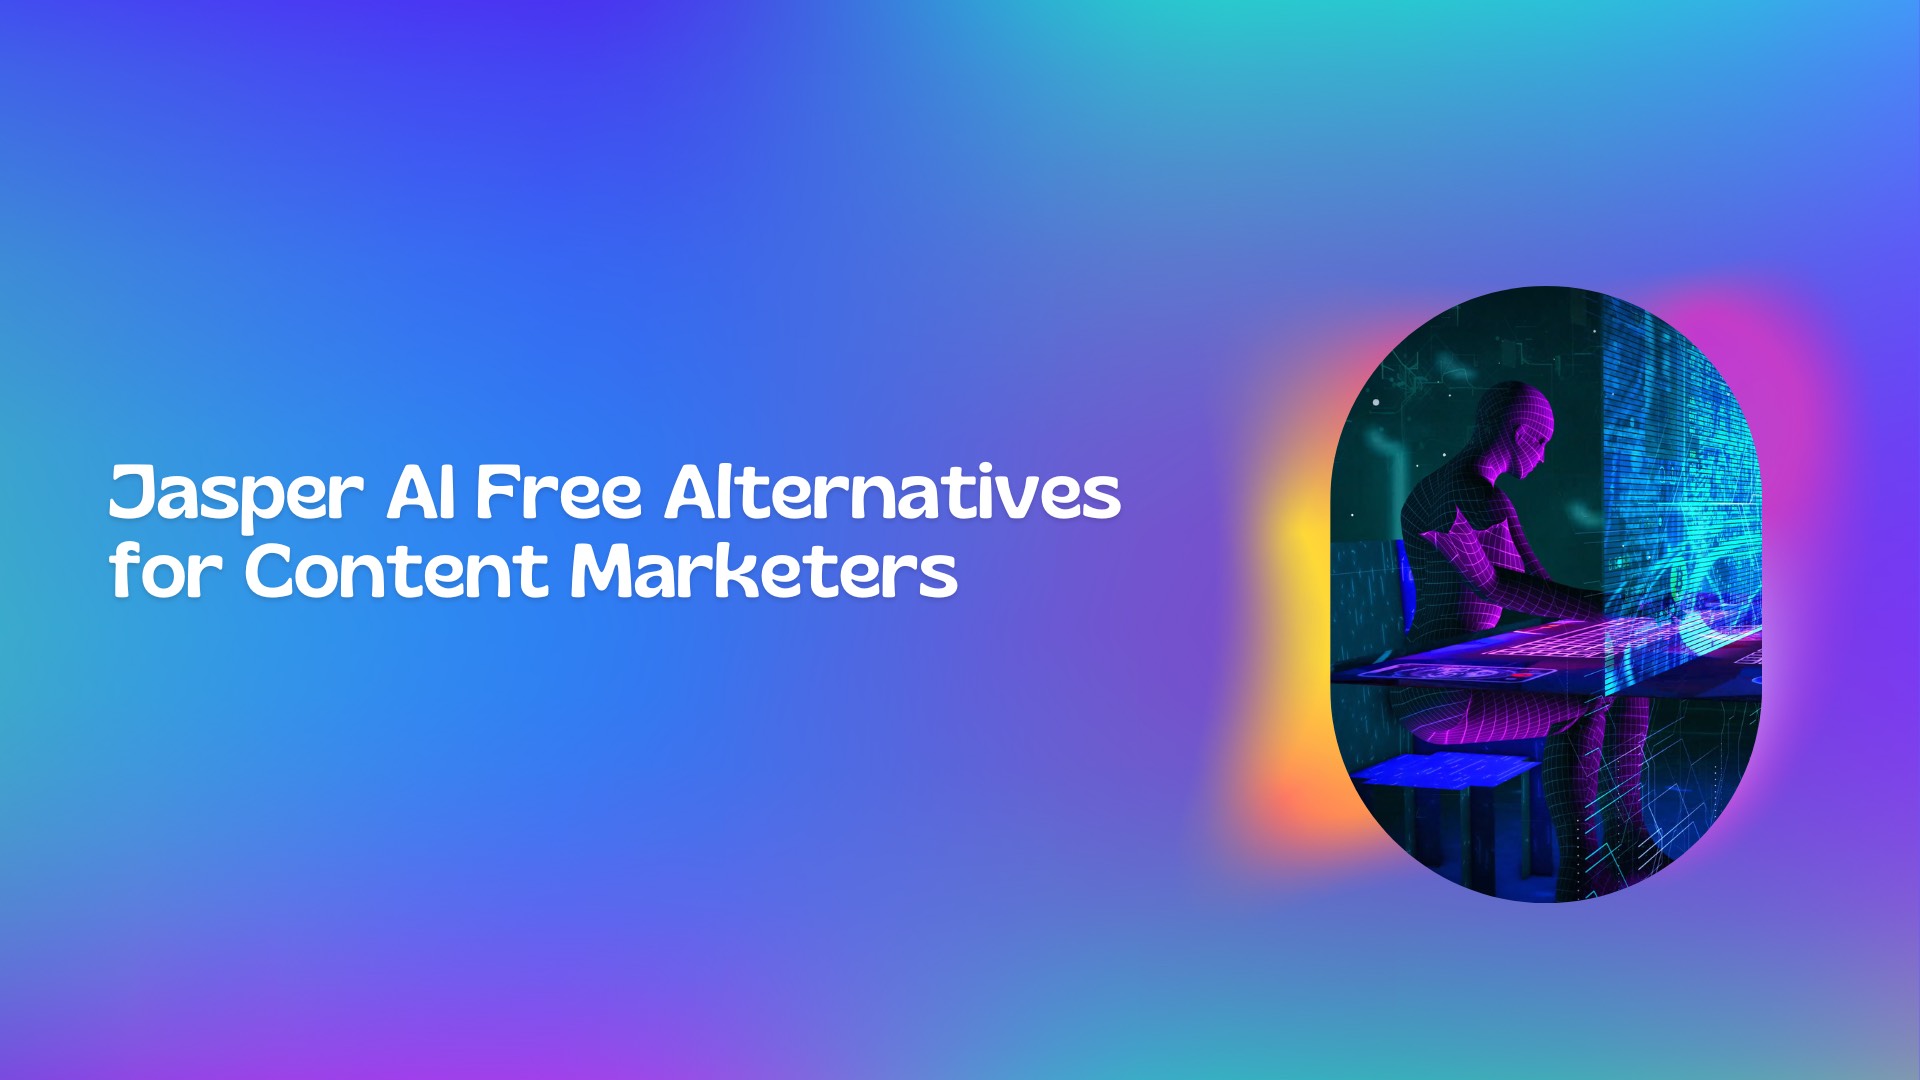 Jasper AI Free Alternatives for Content Marketers